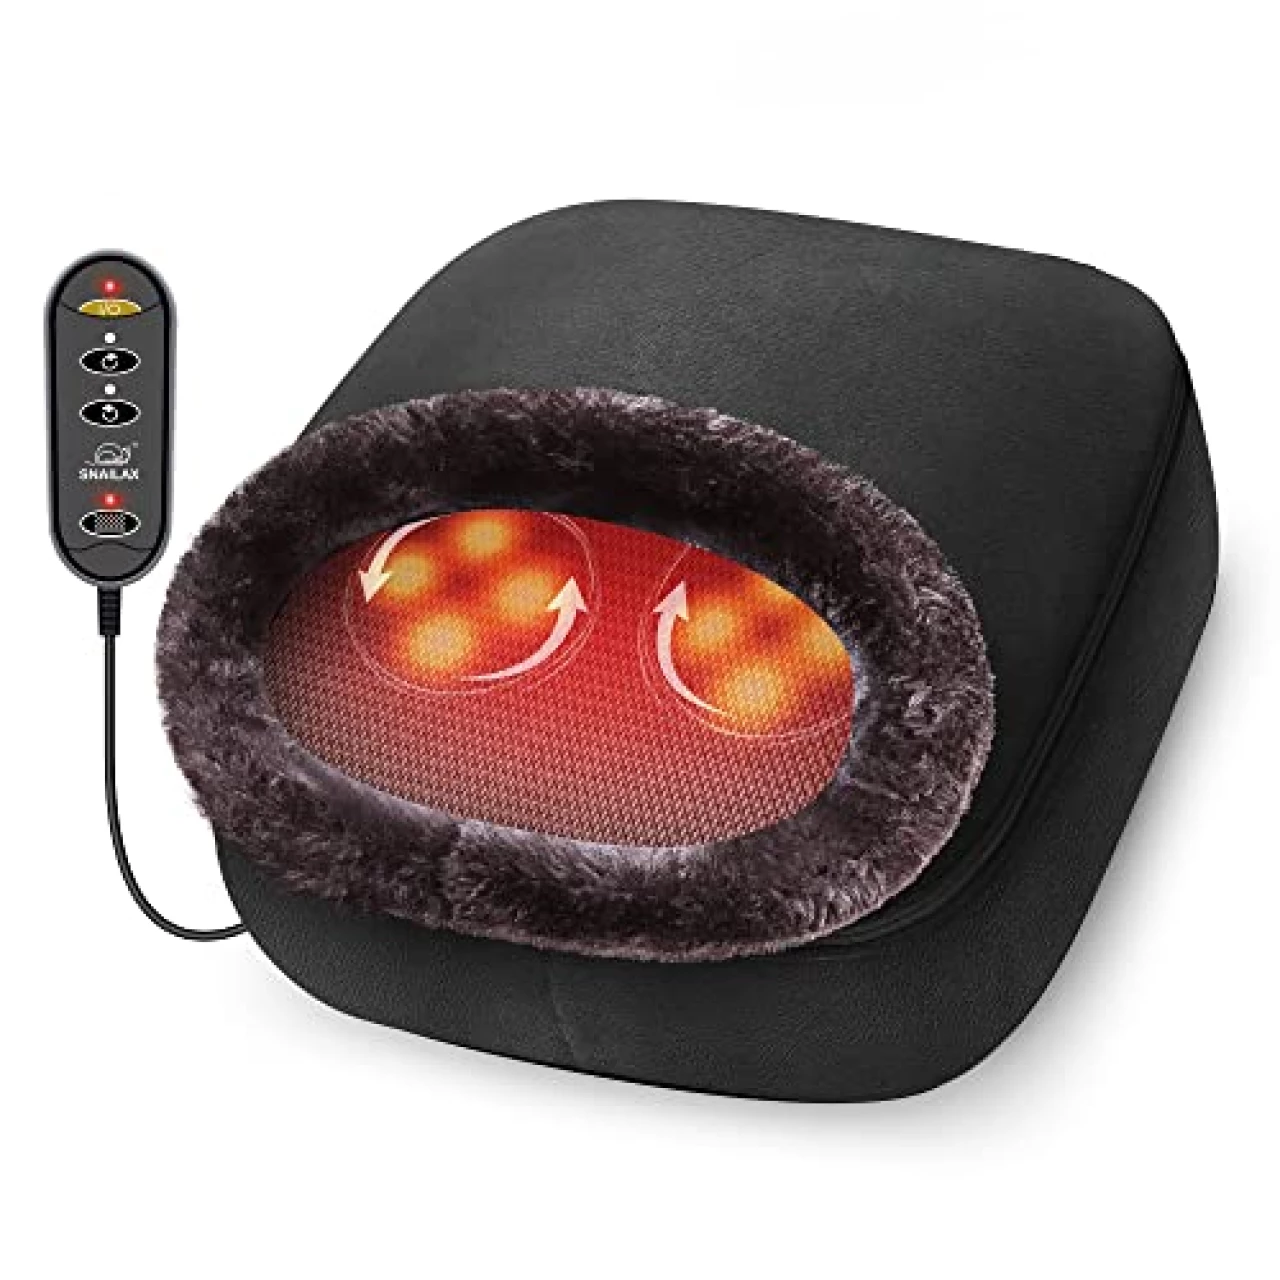 Snailax 2-in-1 Shiatsu Foot and Back Massager with Heat - Kneading Feet Massager Machine